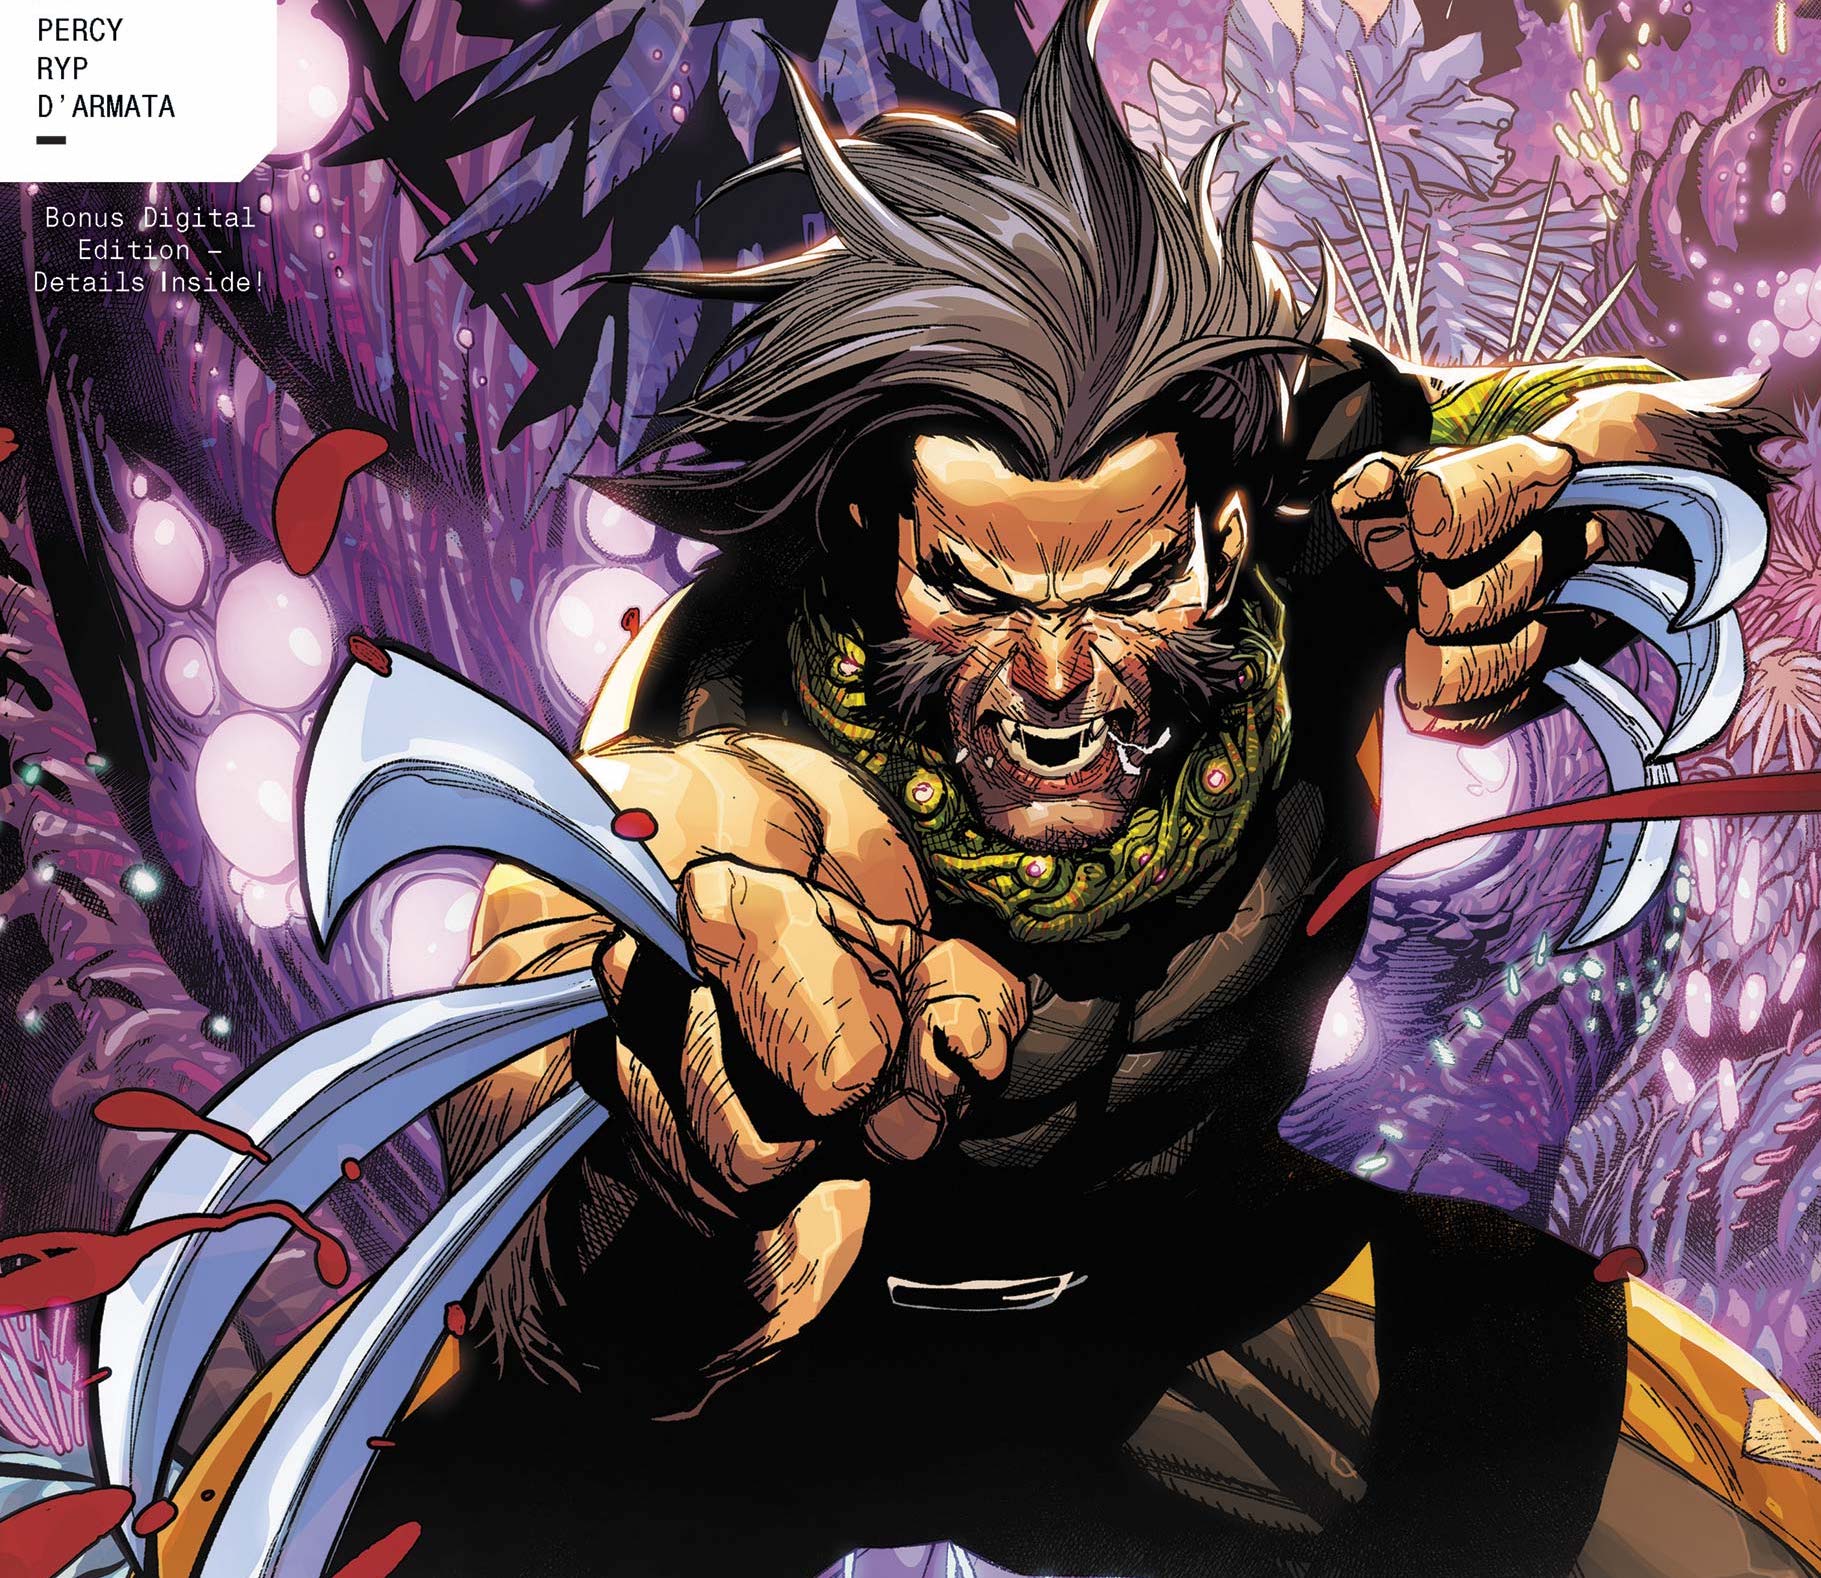 'Wolverine' #27 shows just how far Beast has fallen